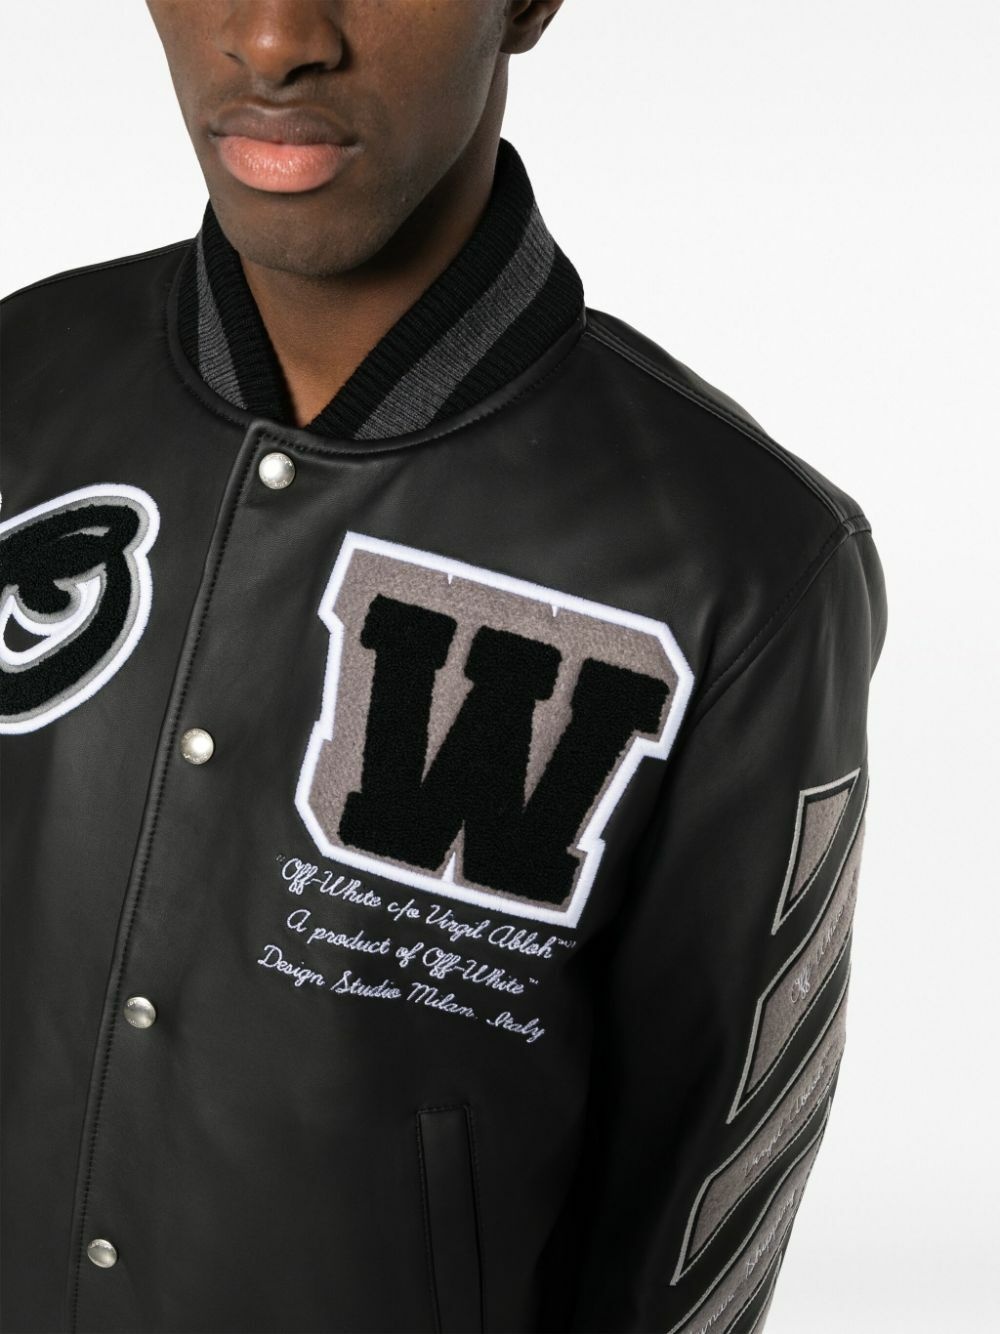 Off-White logo-appliqued varsity jacket - Black  Leather varsity jackets, Off  white varsity jacket, Varsity jacket